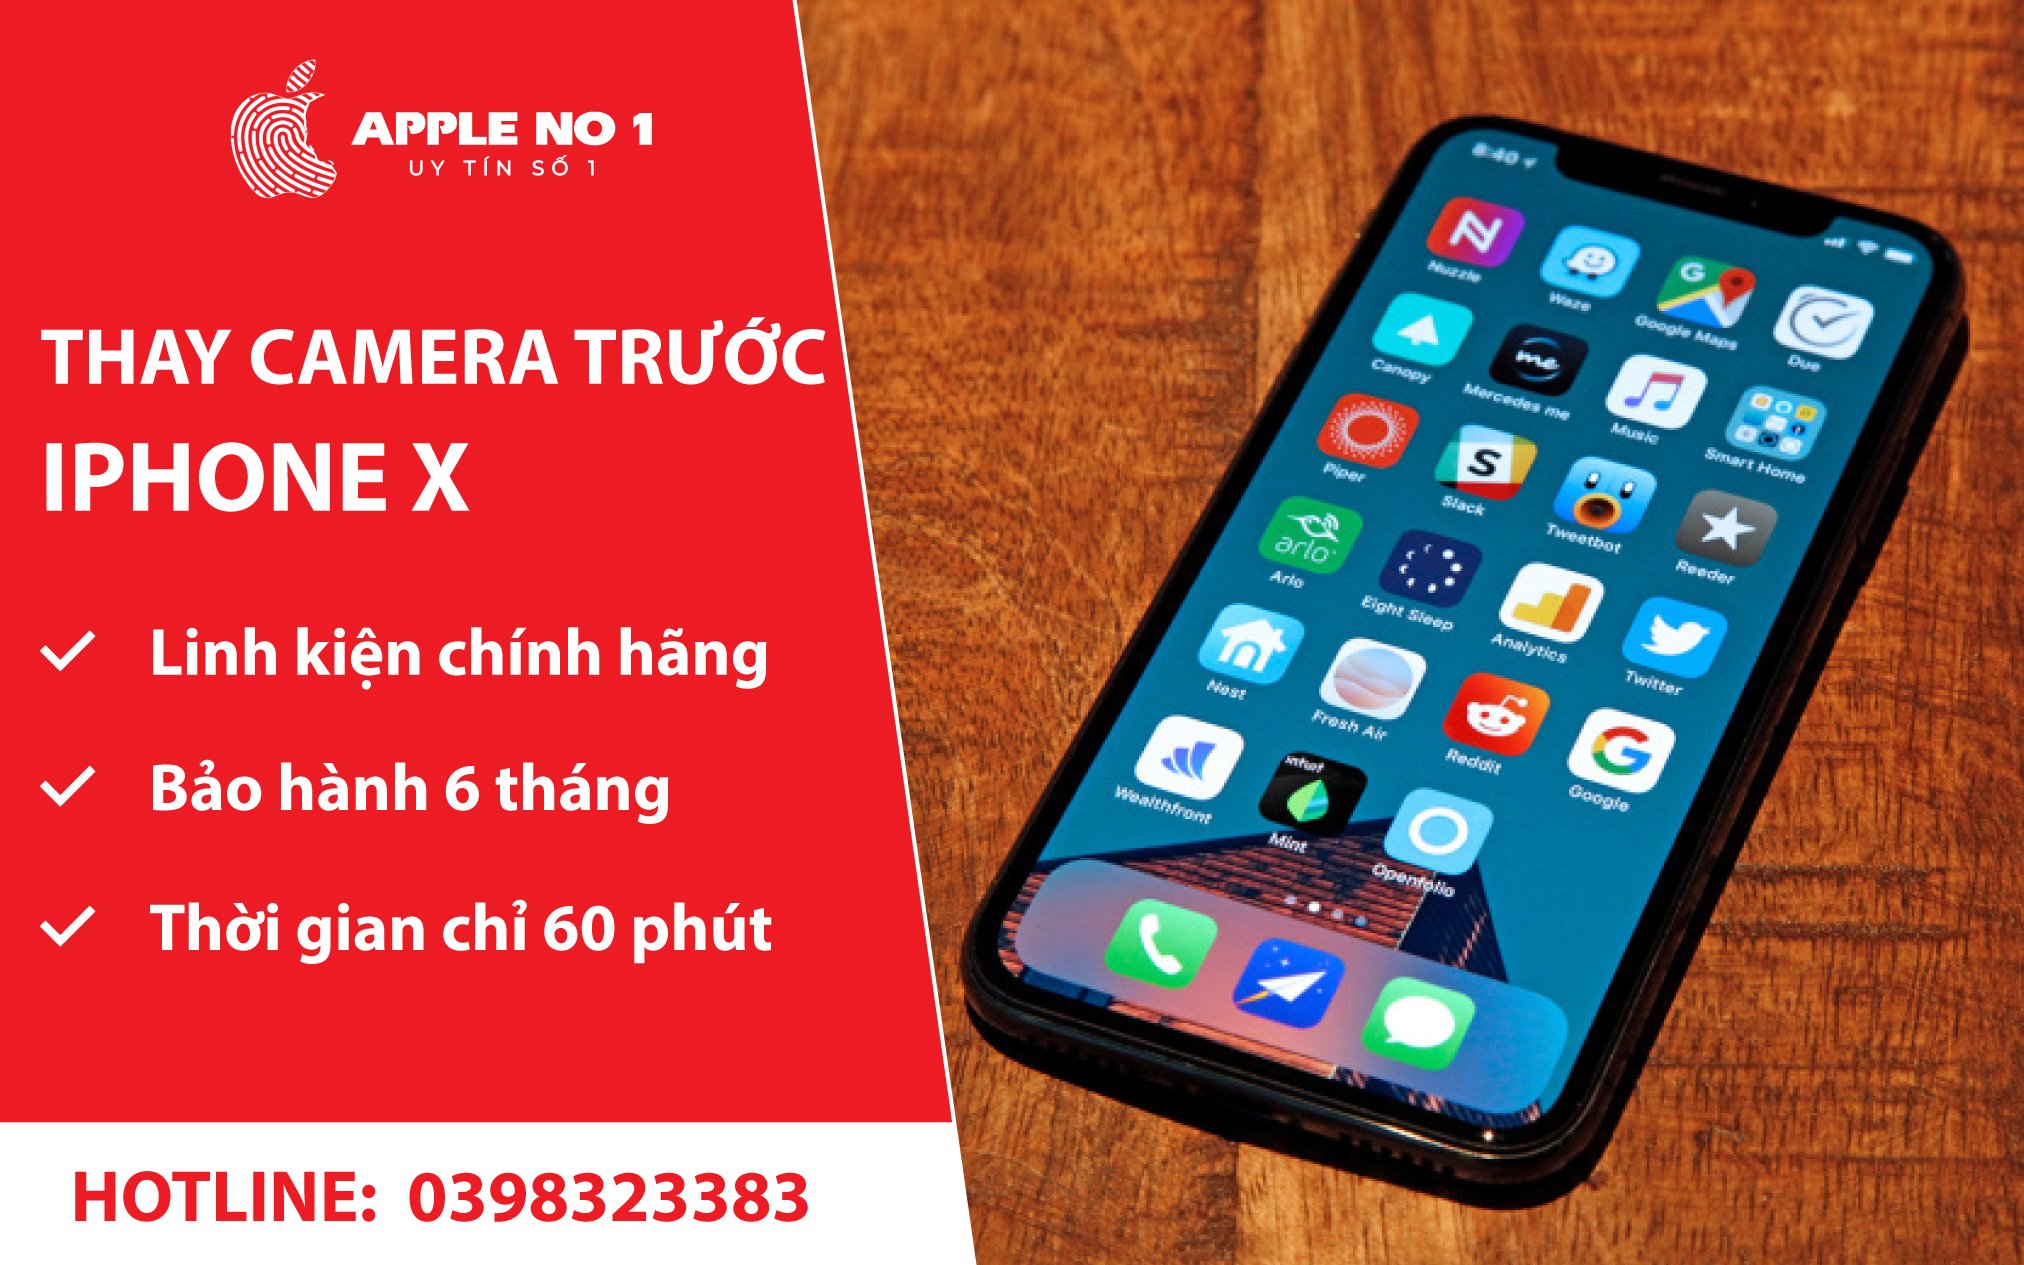 thay camera truoc iphone x chinh hang tai cua hang sua chua iphone apple no.1